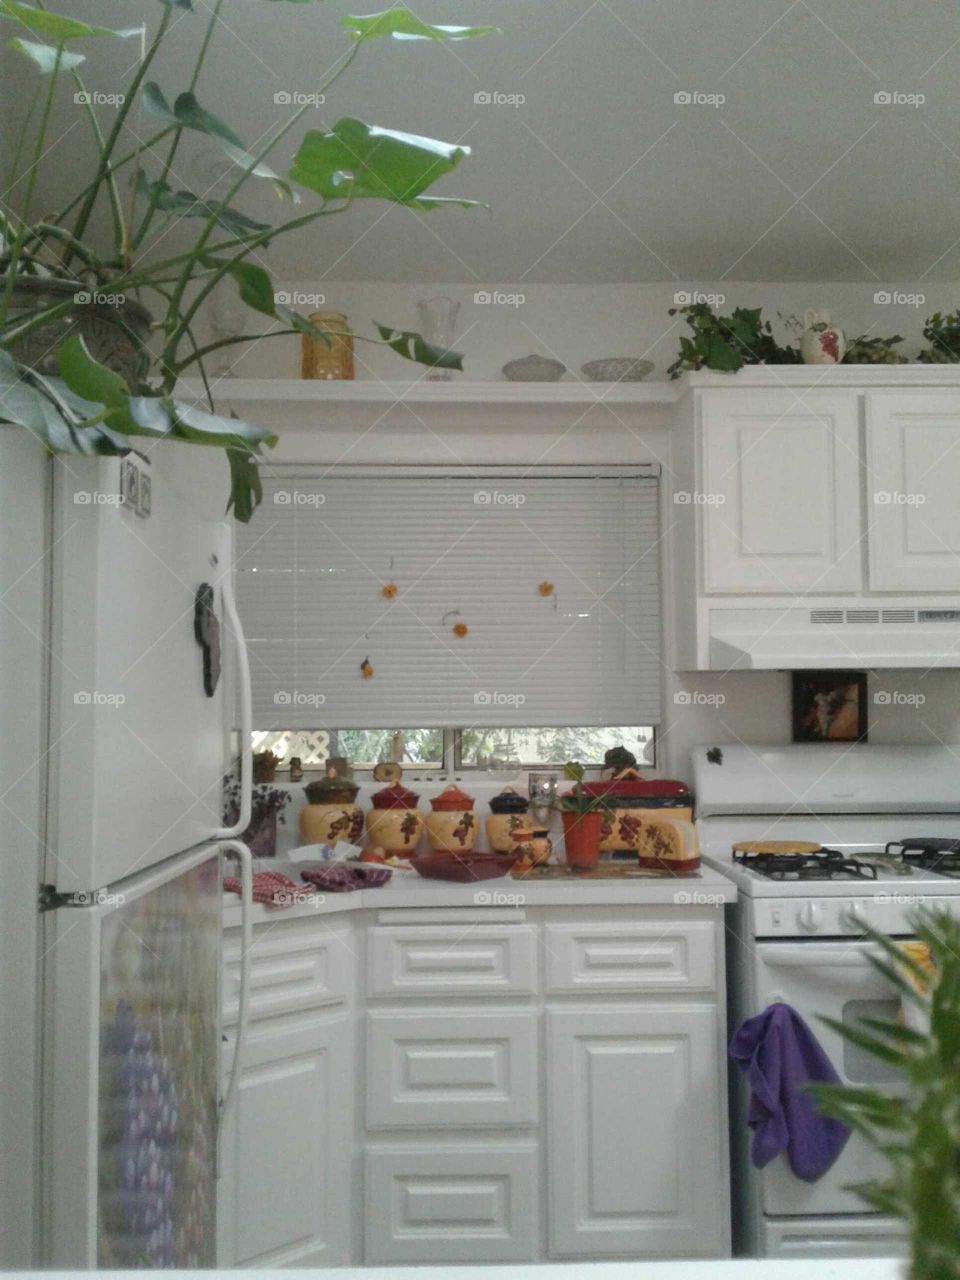 some kitchen scenery